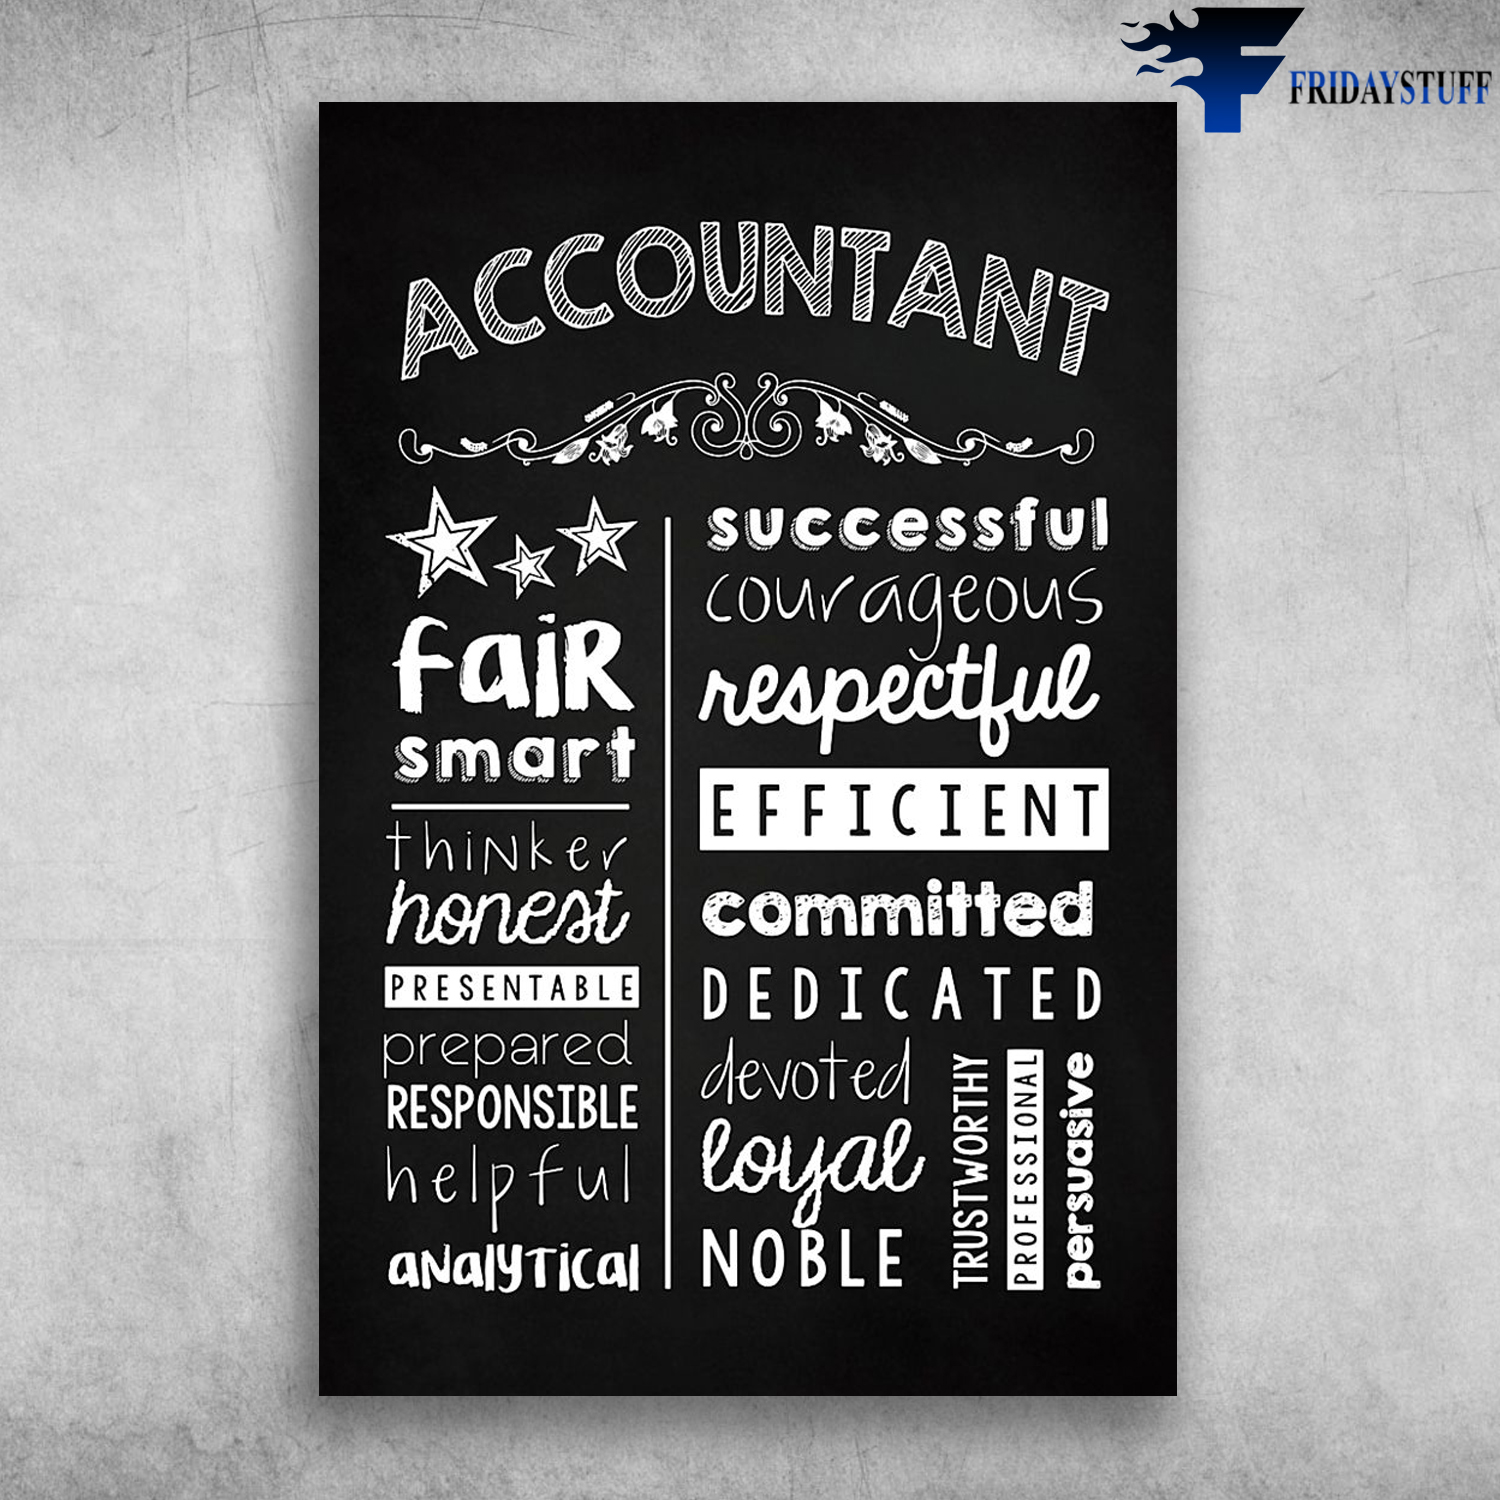 Accountant Fair Smart Thinker Honest Presentable